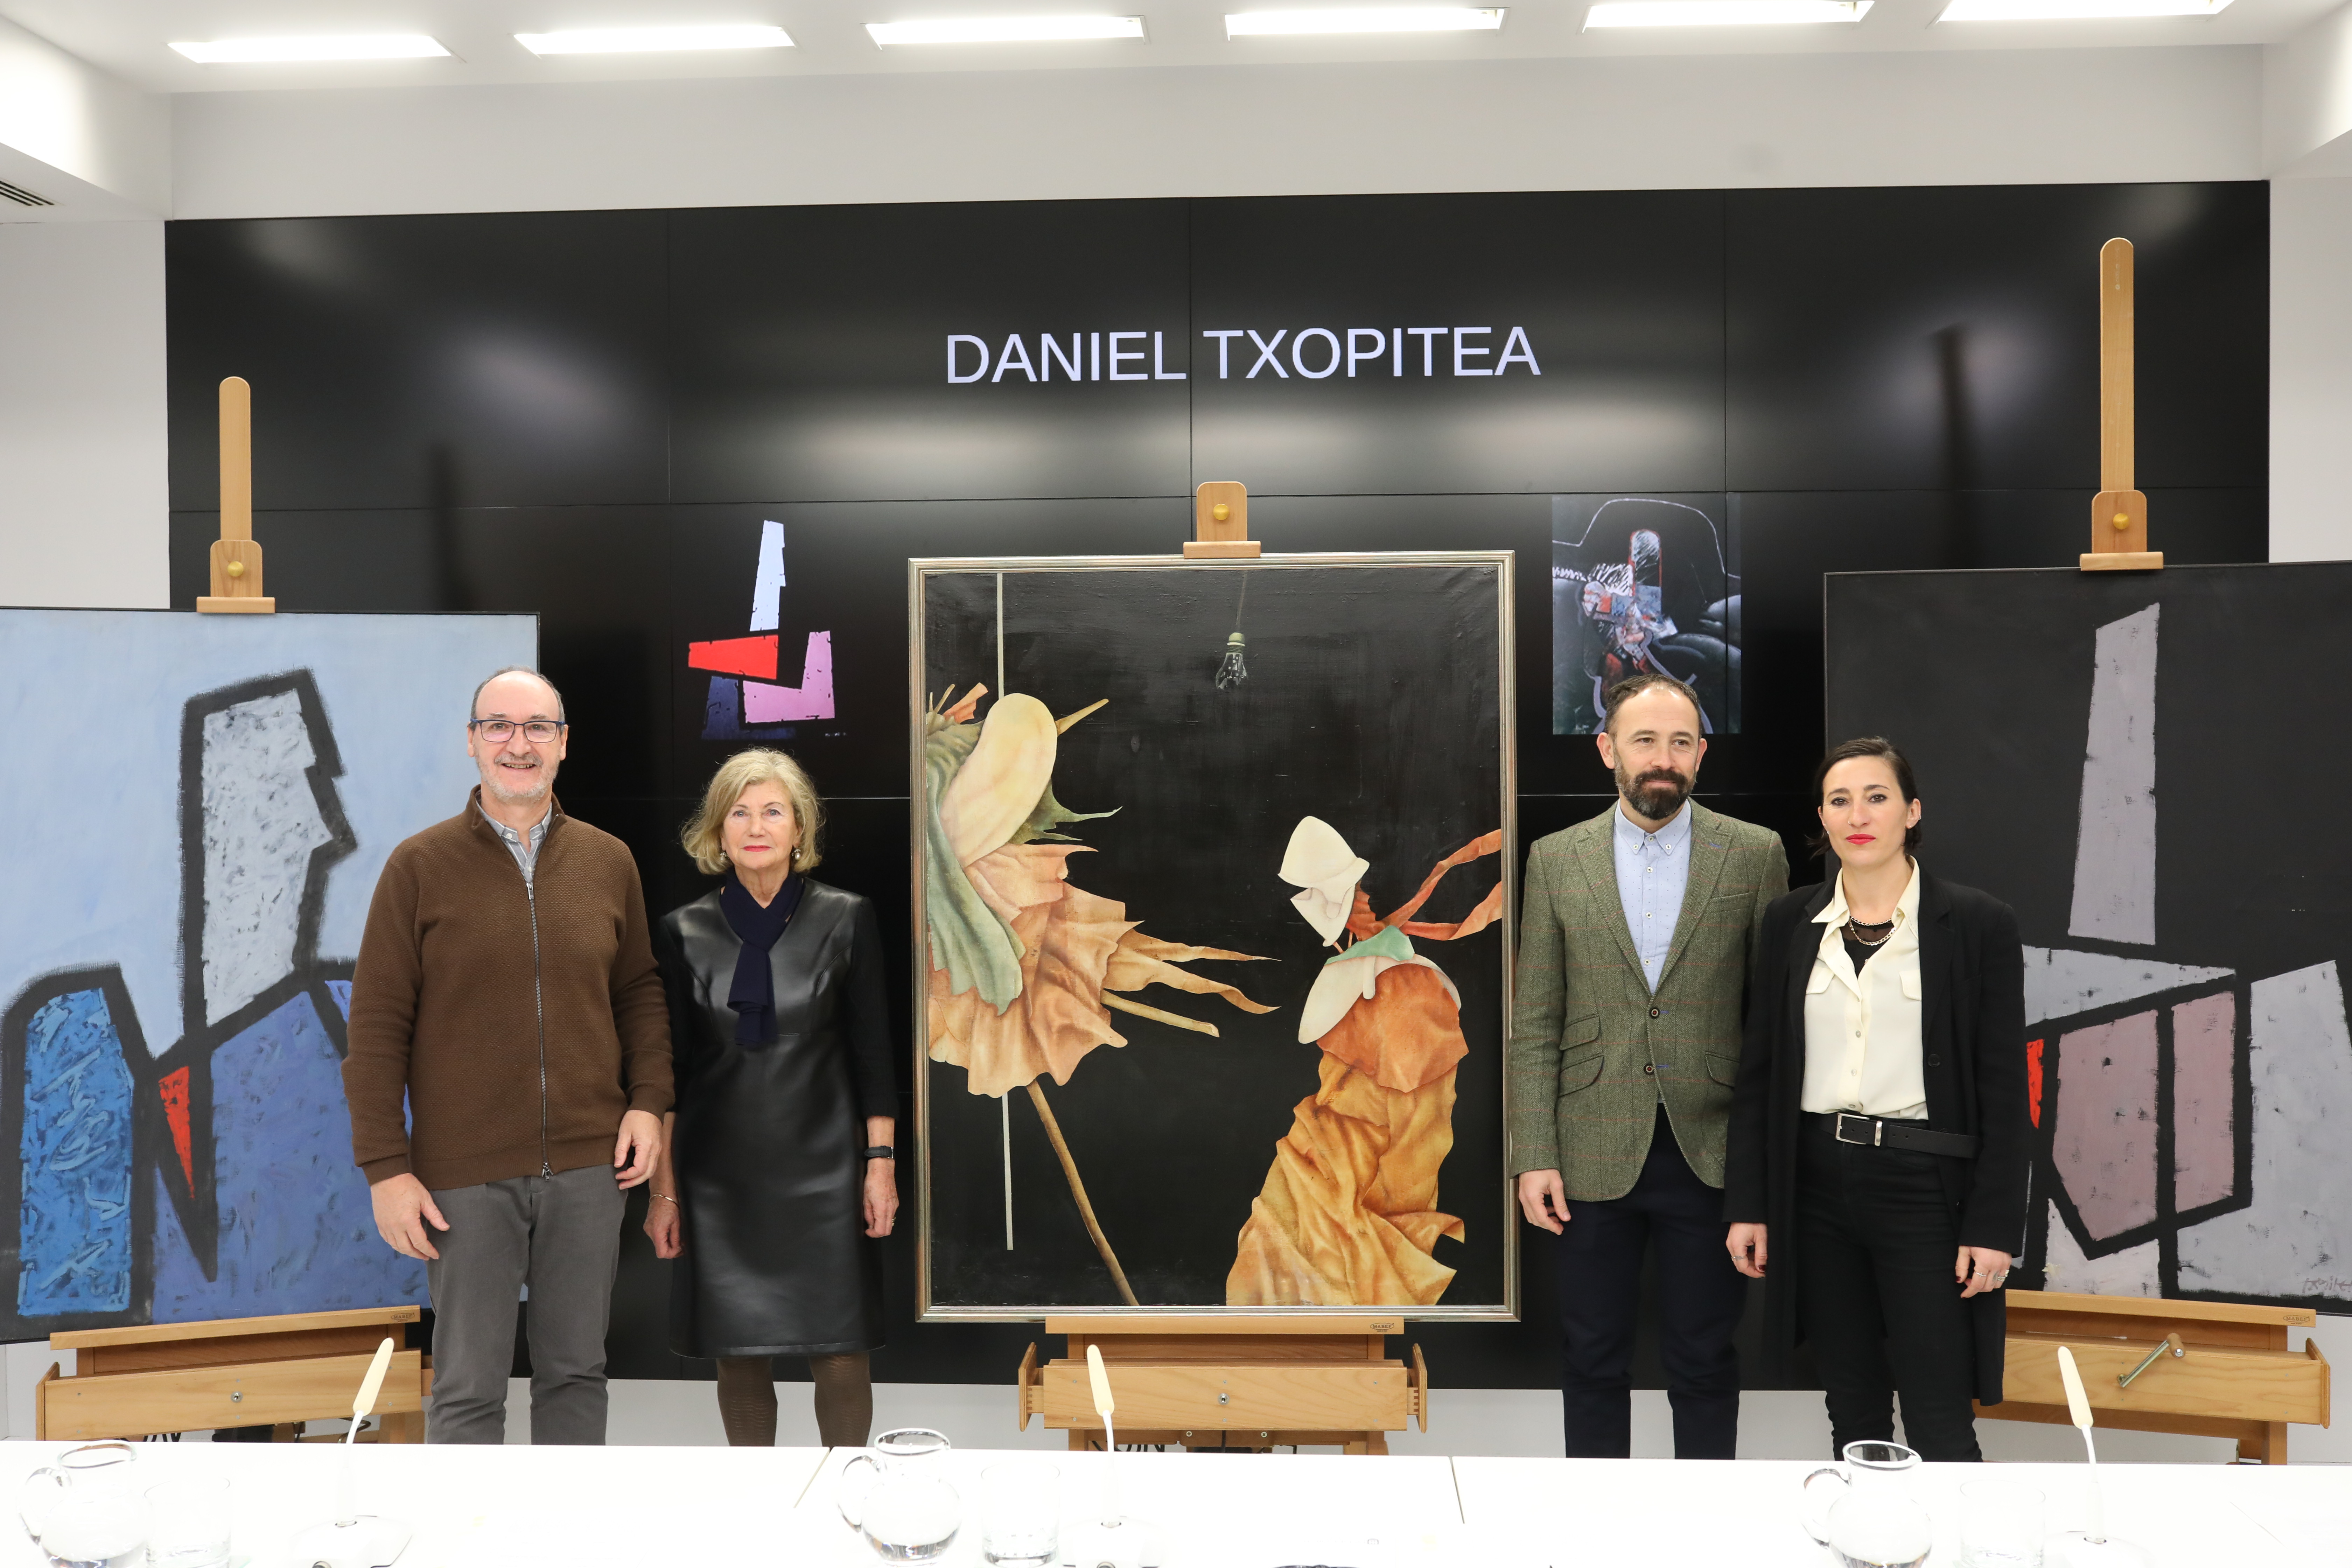 20 obras pictoricas de Daniel Txopitea se van a depositar en régimen de Comodato en Gordailua.